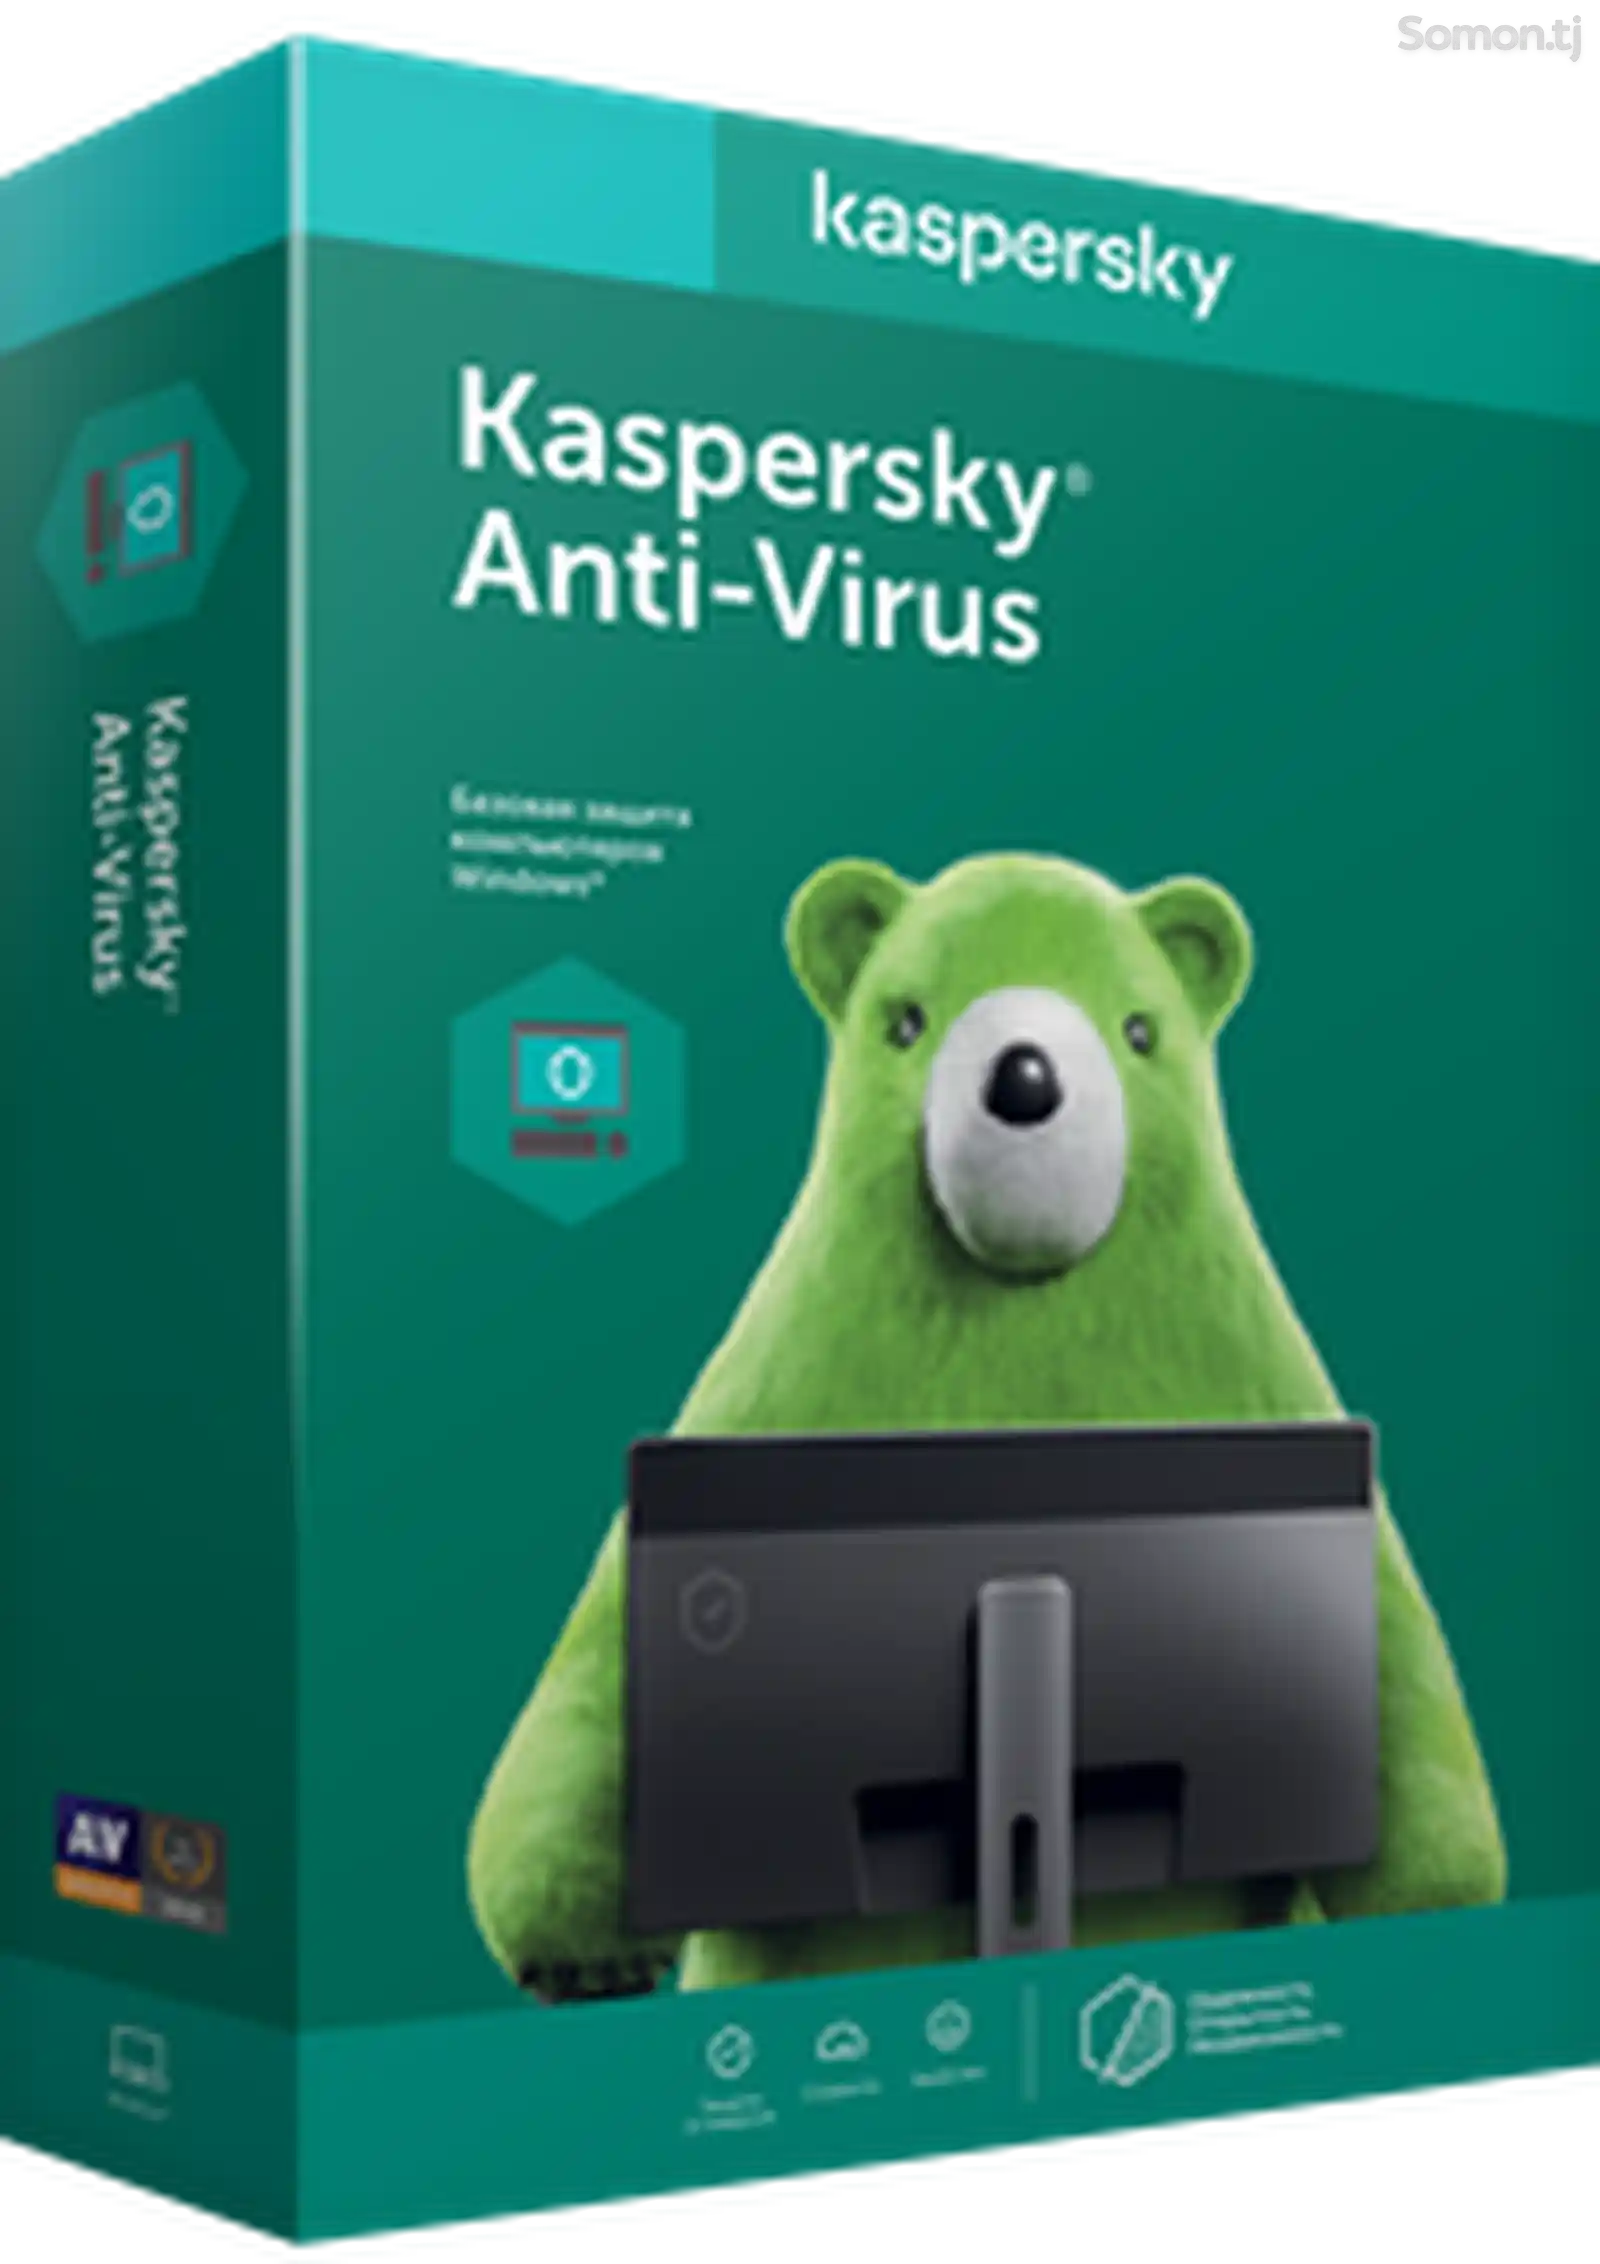 Kaspersky Anti-Virus - иҷозатнома барои 2 роёна, 1 сол